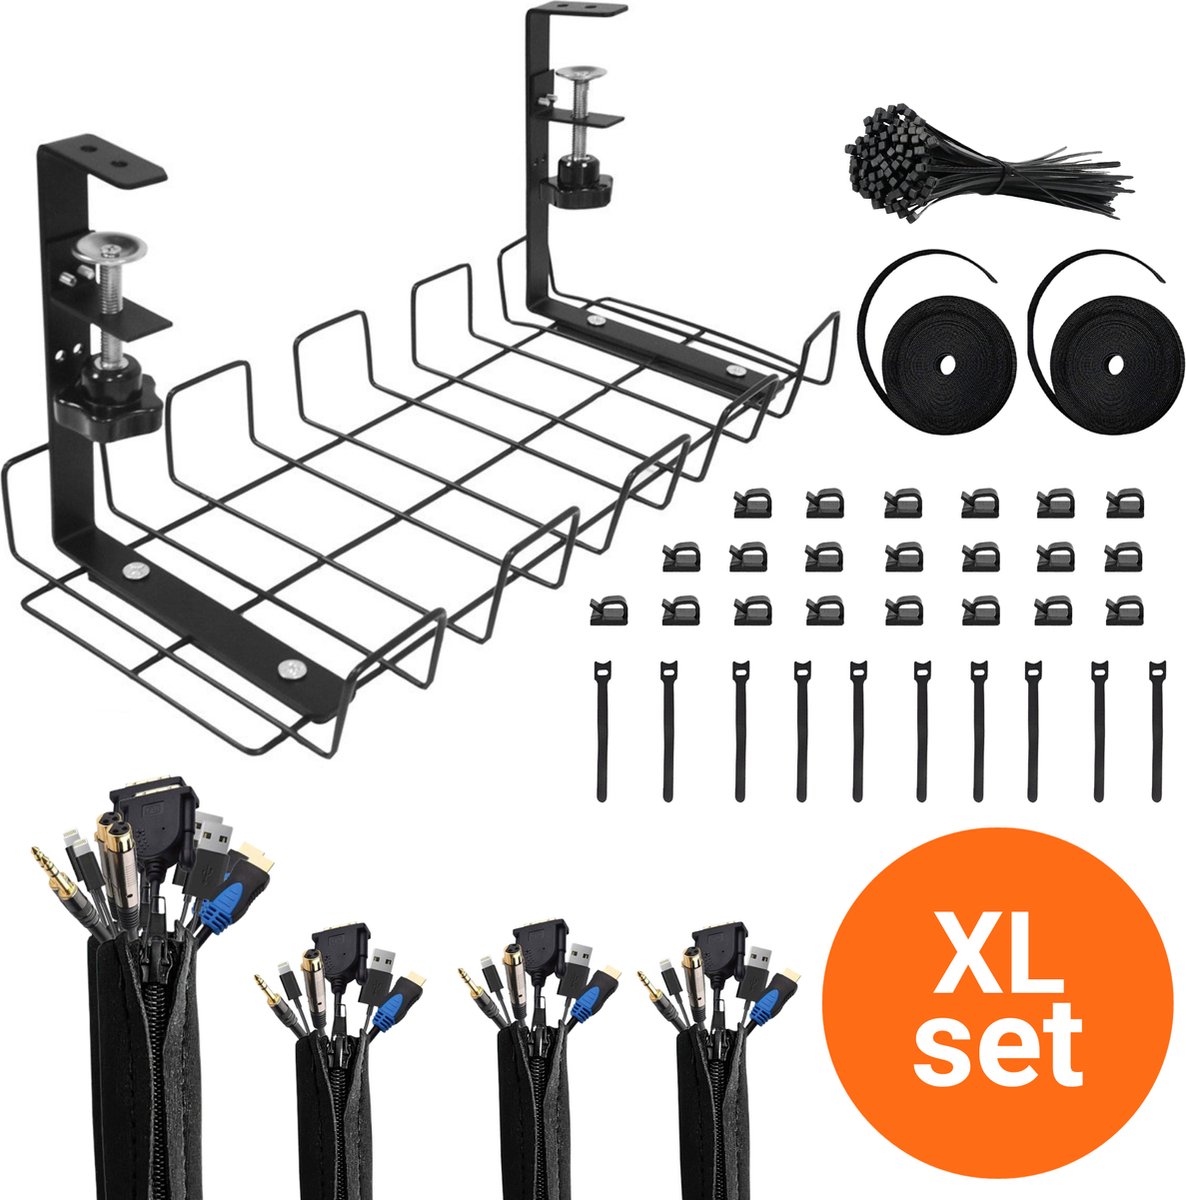 For-ce kabelmanagement set XL - 137 pcs - Inclusief cable management tray - Bureau organizer - Kabelgoot - Kabel organiser